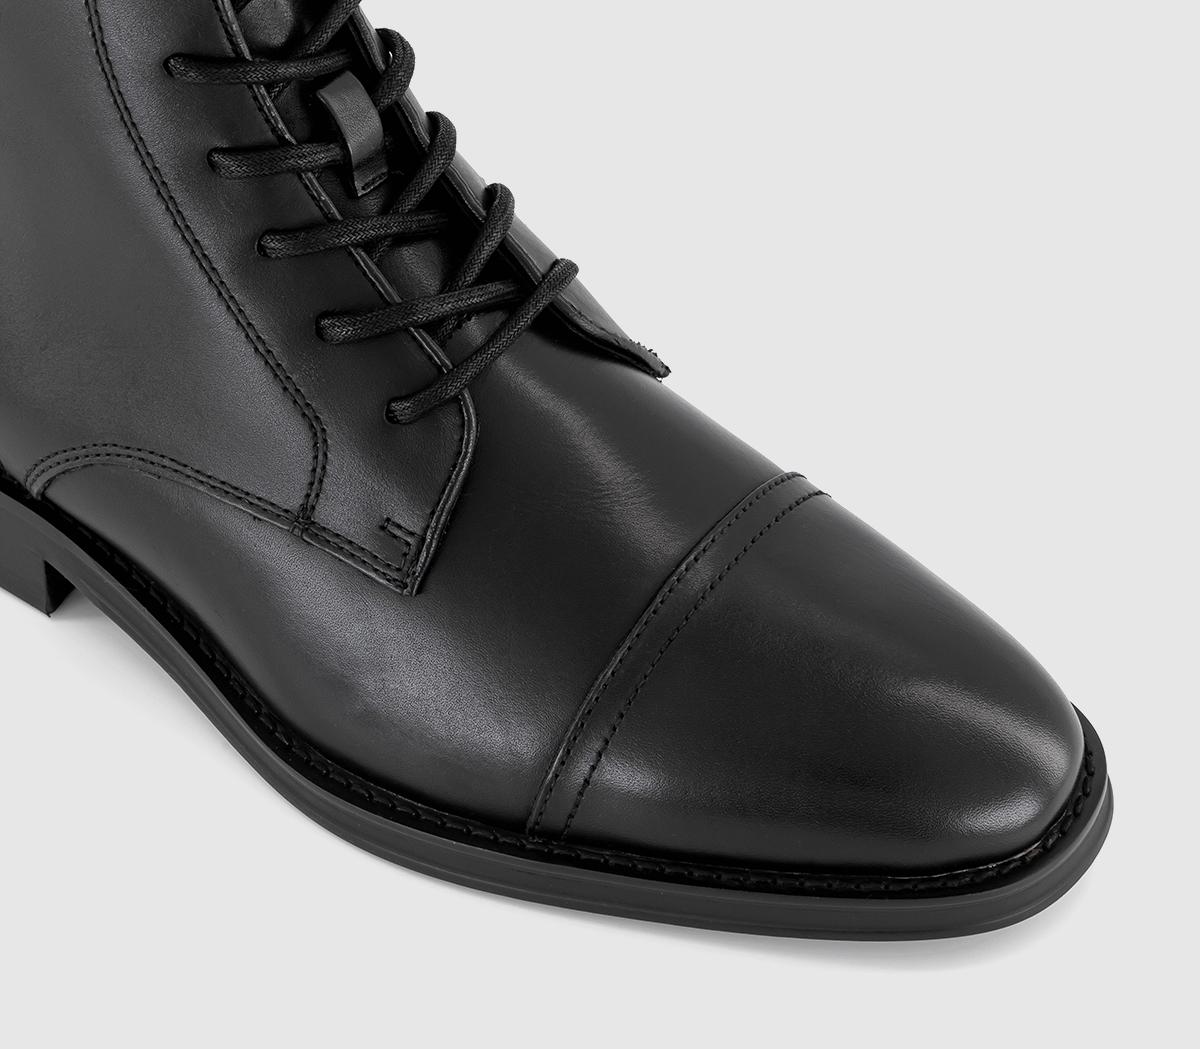 OFFICE Berwick Smart Laceup Toecap Boots Black Leather - Men’s Boots